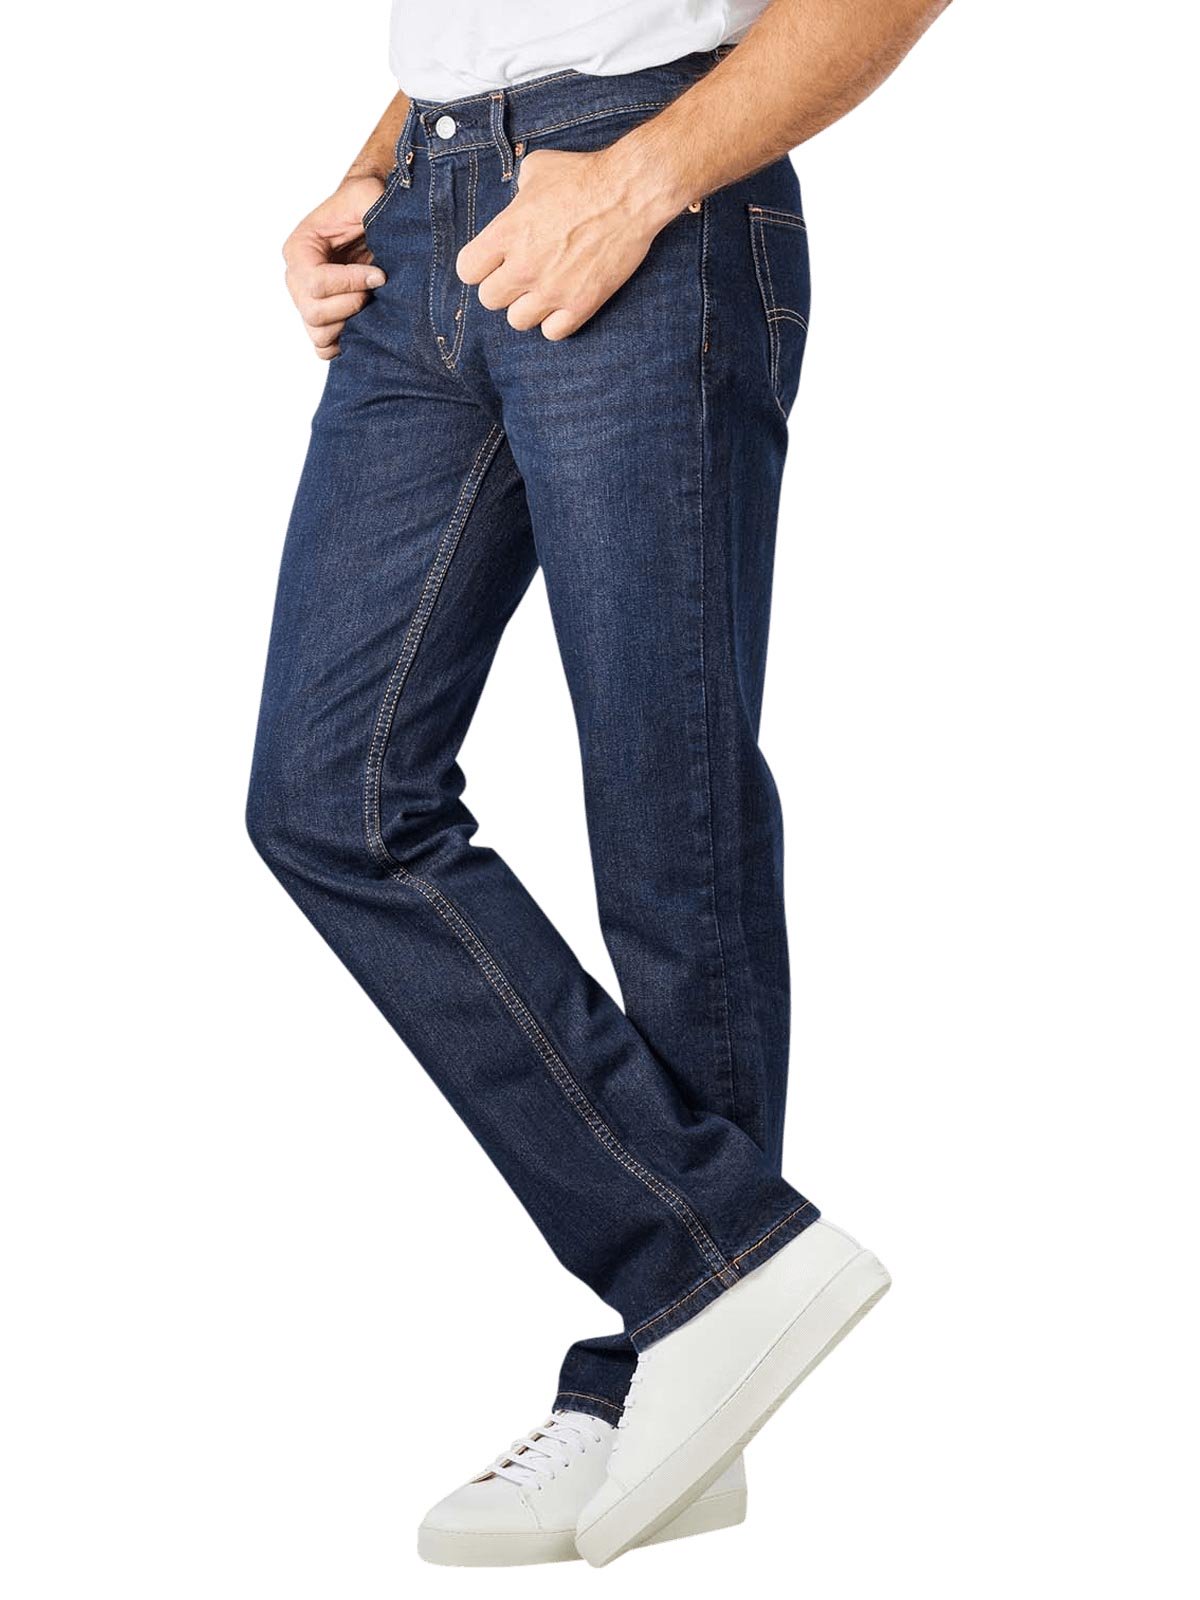 Levi's CLEAN RUN Men's 514 Straight Fit Eco Performance Jeans, US 31x30  (236M)